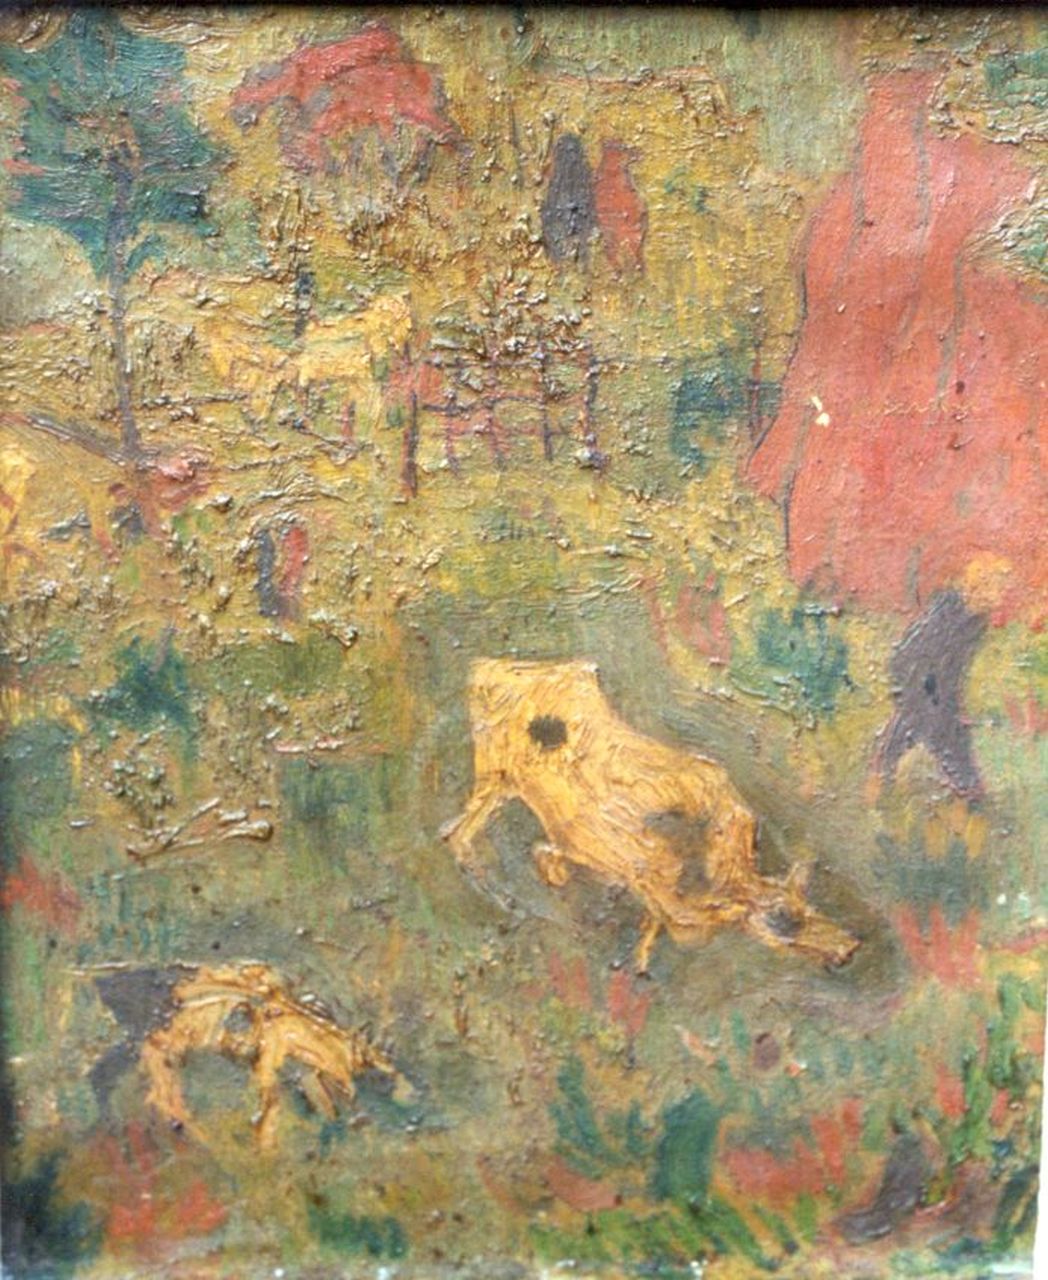 Harrie Pardoel | A landscape with cows, Öl auf Leinwand, 30,2 x 24,0 cm, signed u.r.